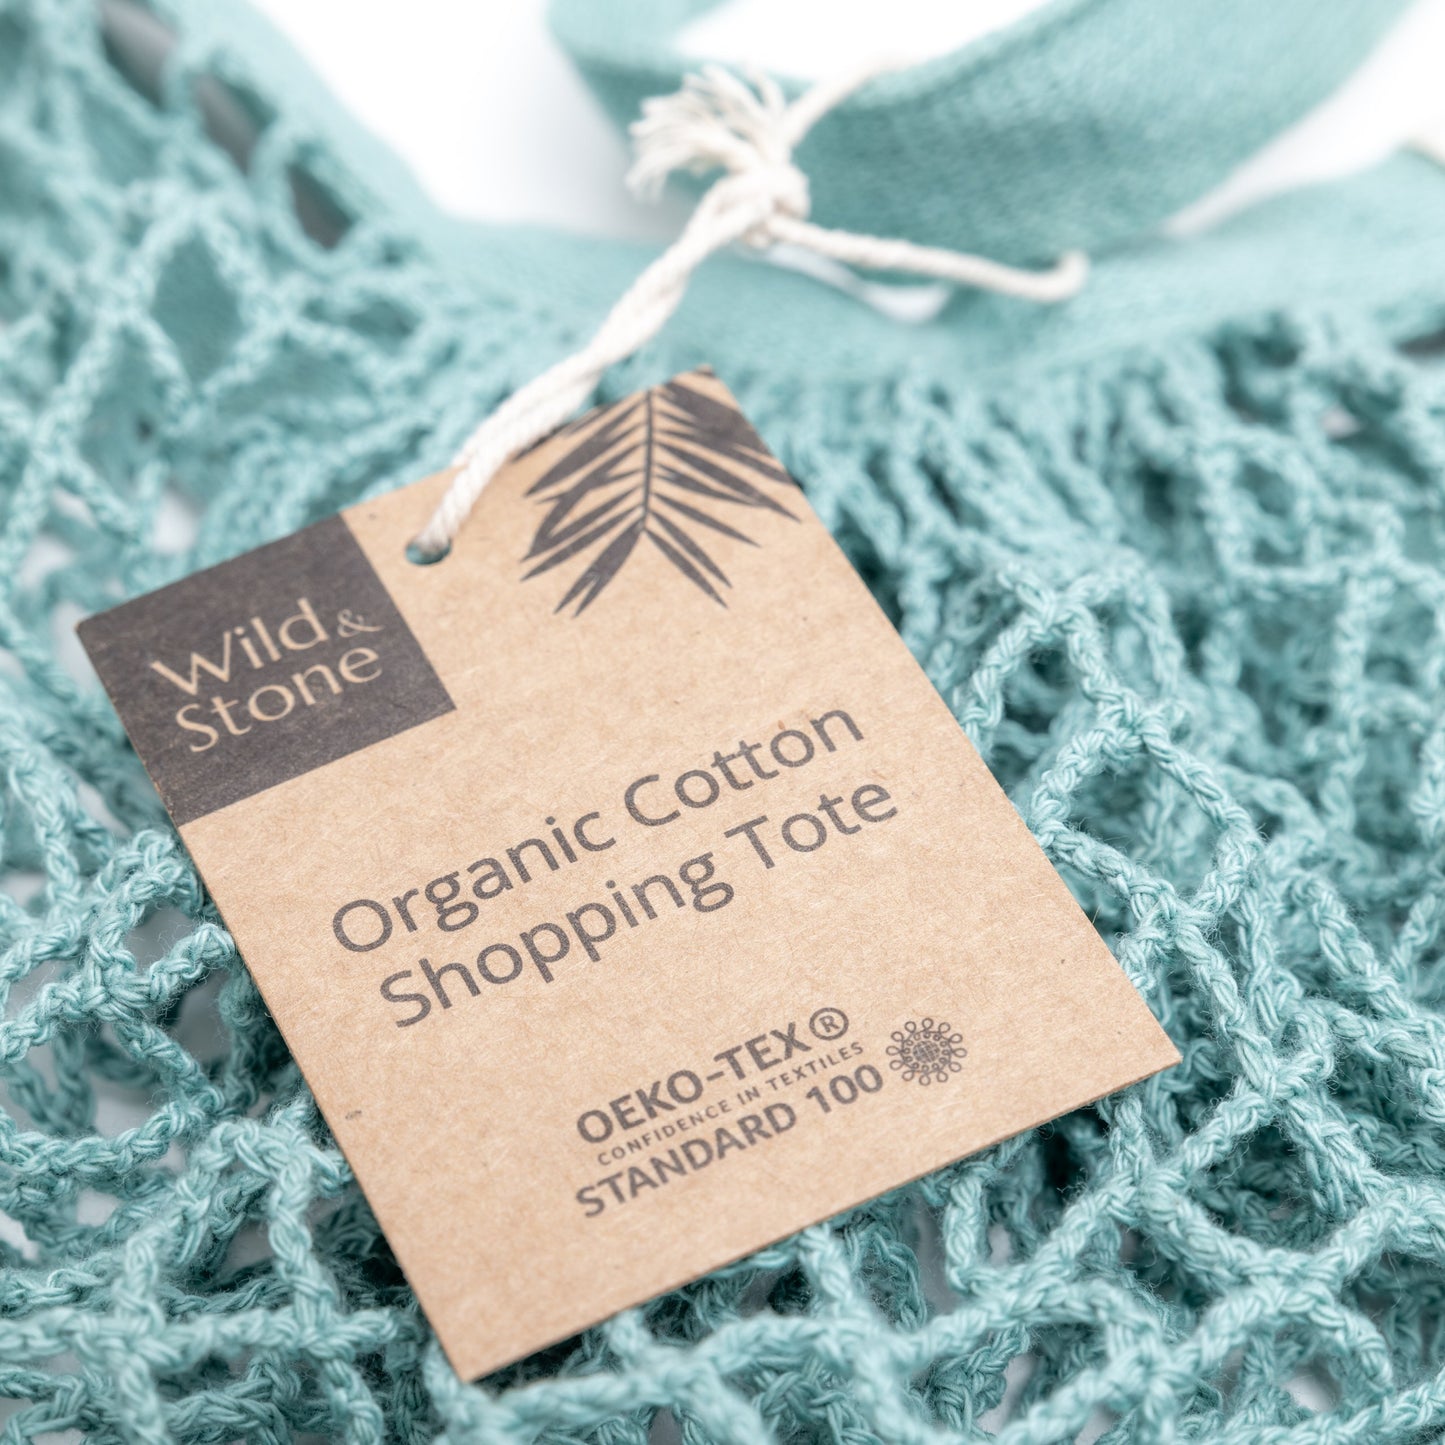 Wild & Stone Organic Cotton Crochet Tote Bag - Blue